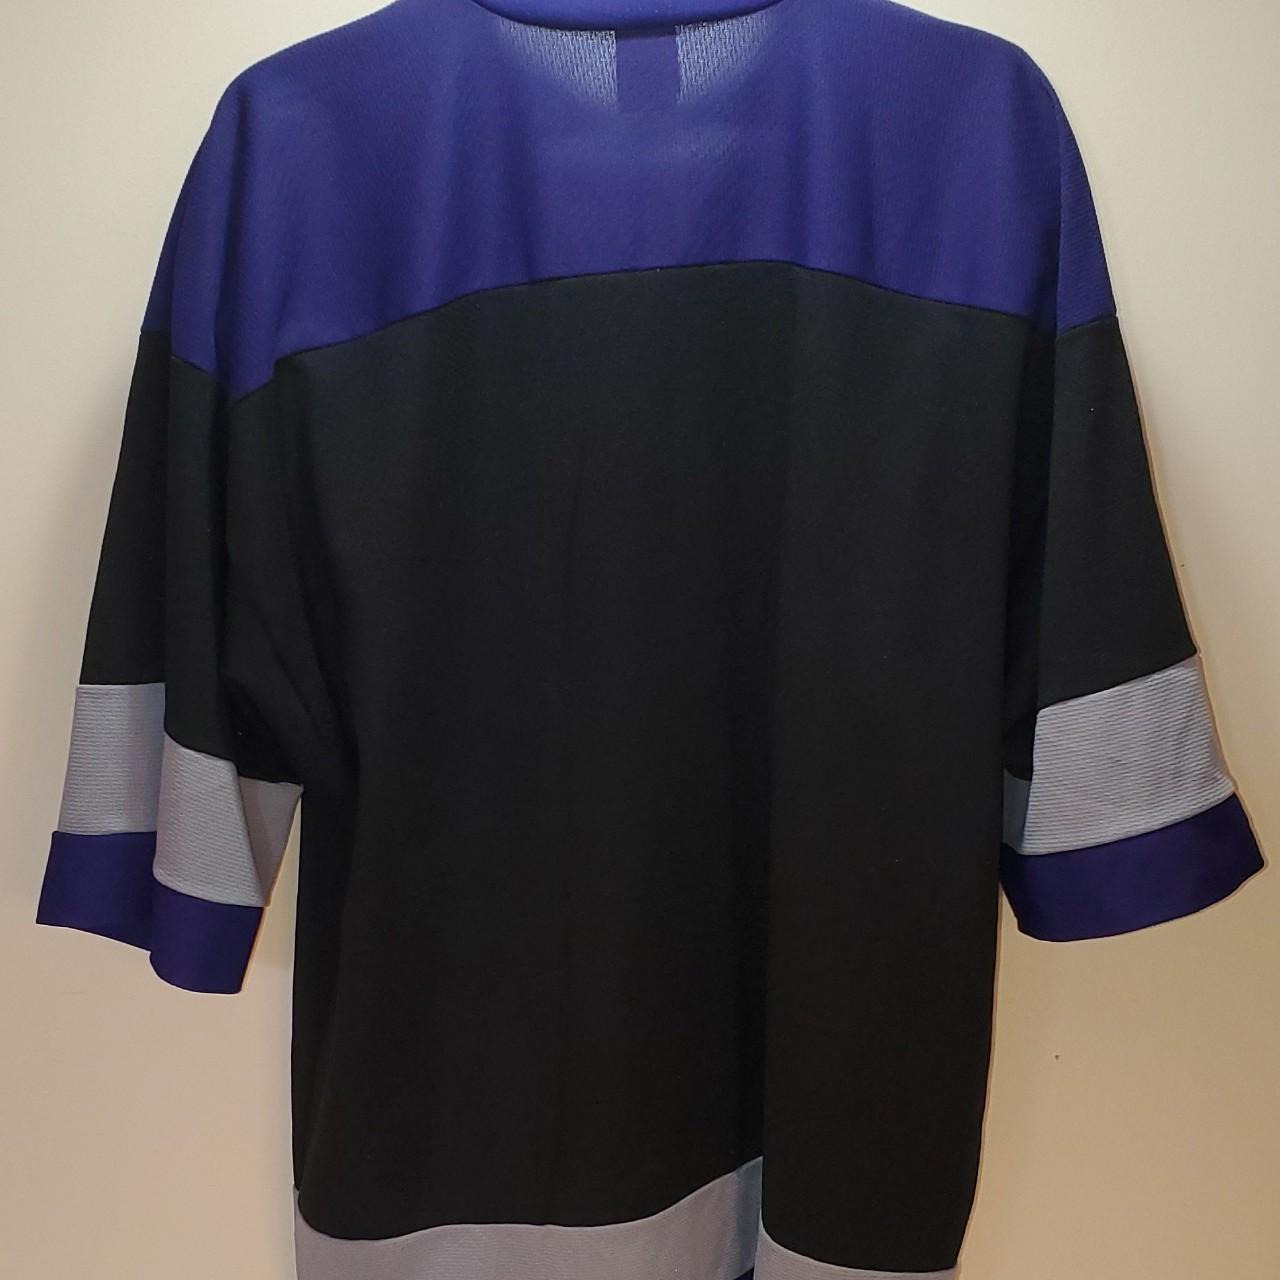 Vintage style L.A. Kings jersey. Sized XXL. - Depop